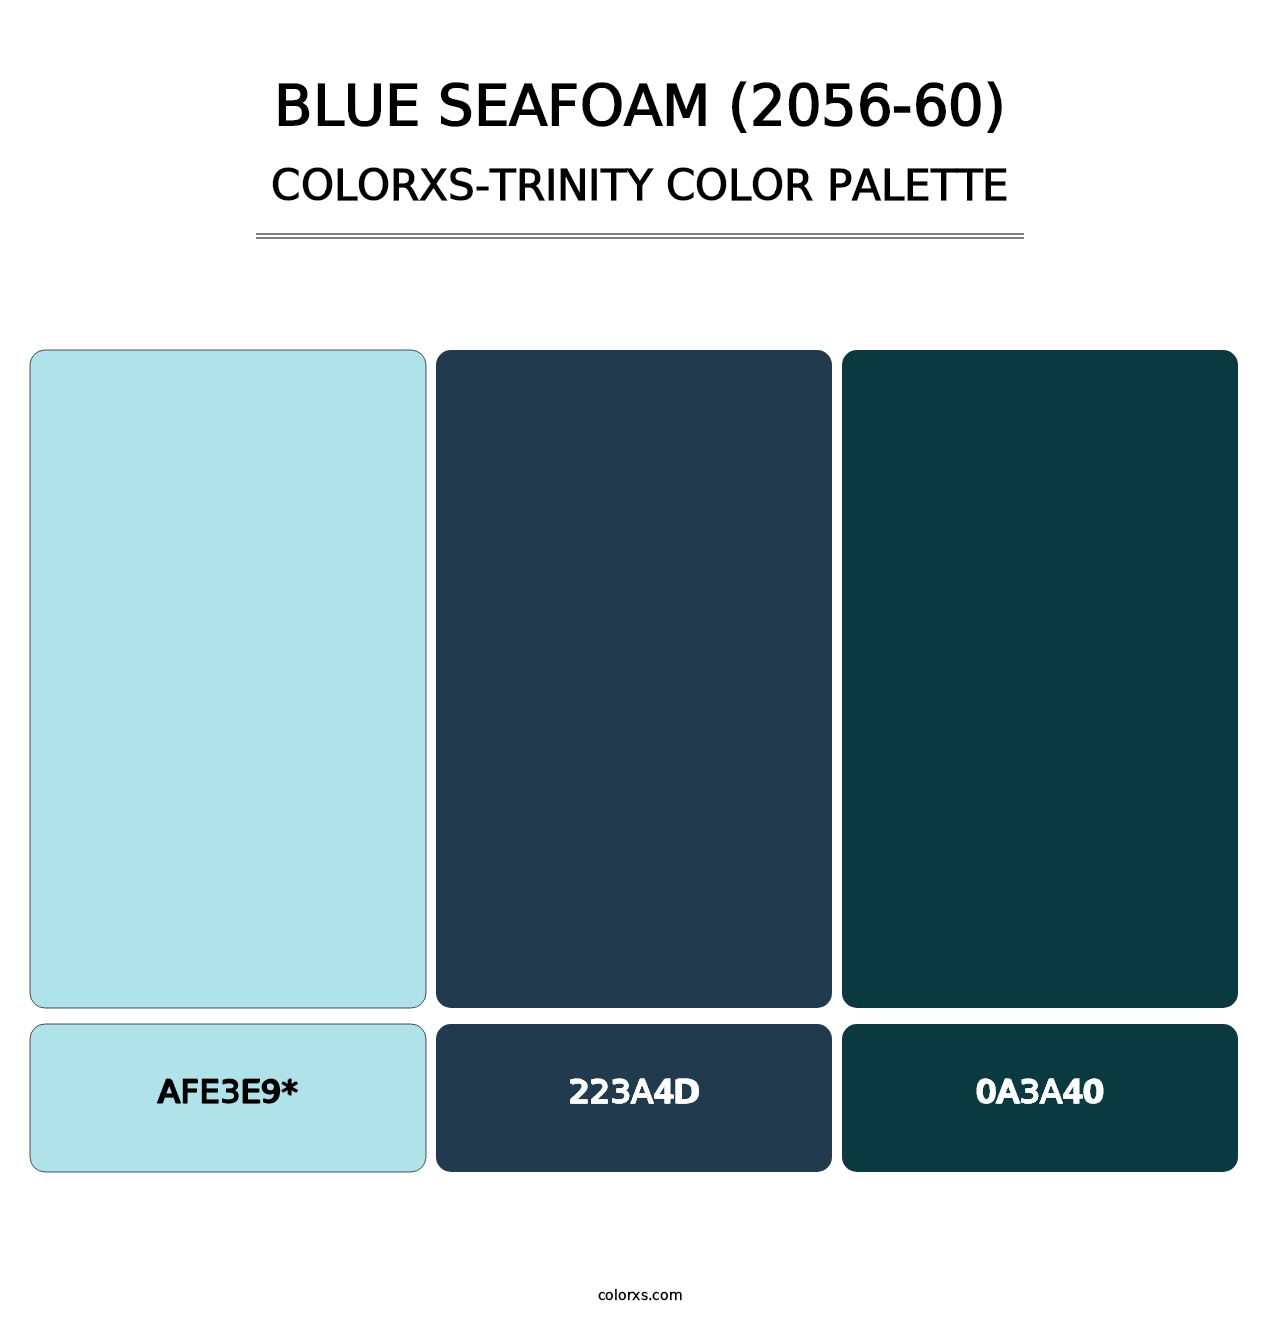 Blue Seafoam (2056-60) - Colorxs Trinity Palette